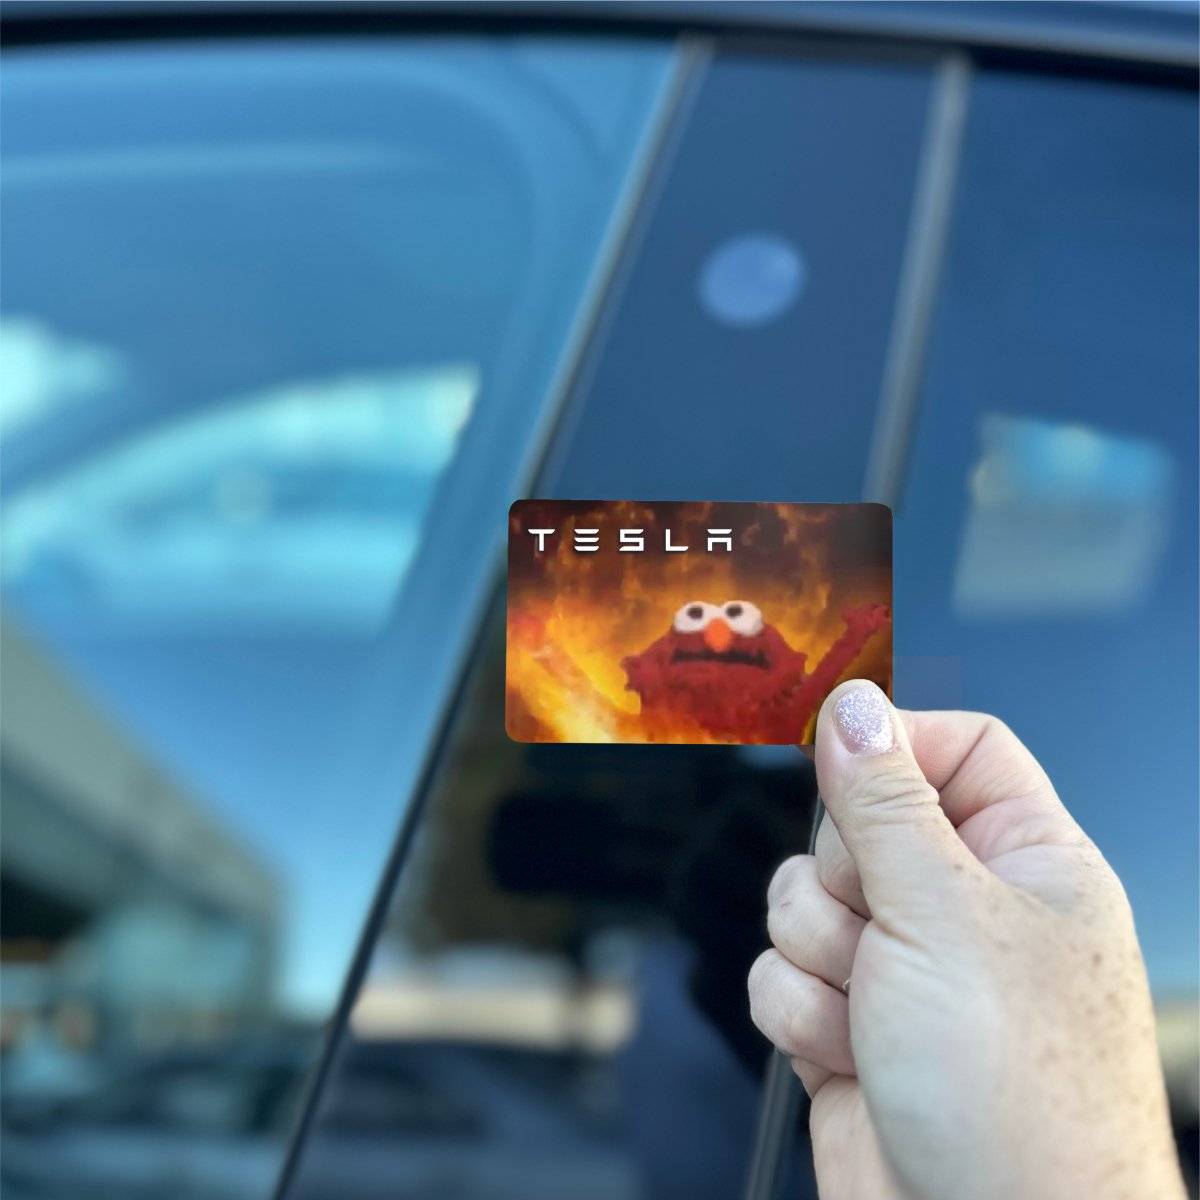 Elmo on Fire Meme Tesla Keycard Decal - Tesla Emblems